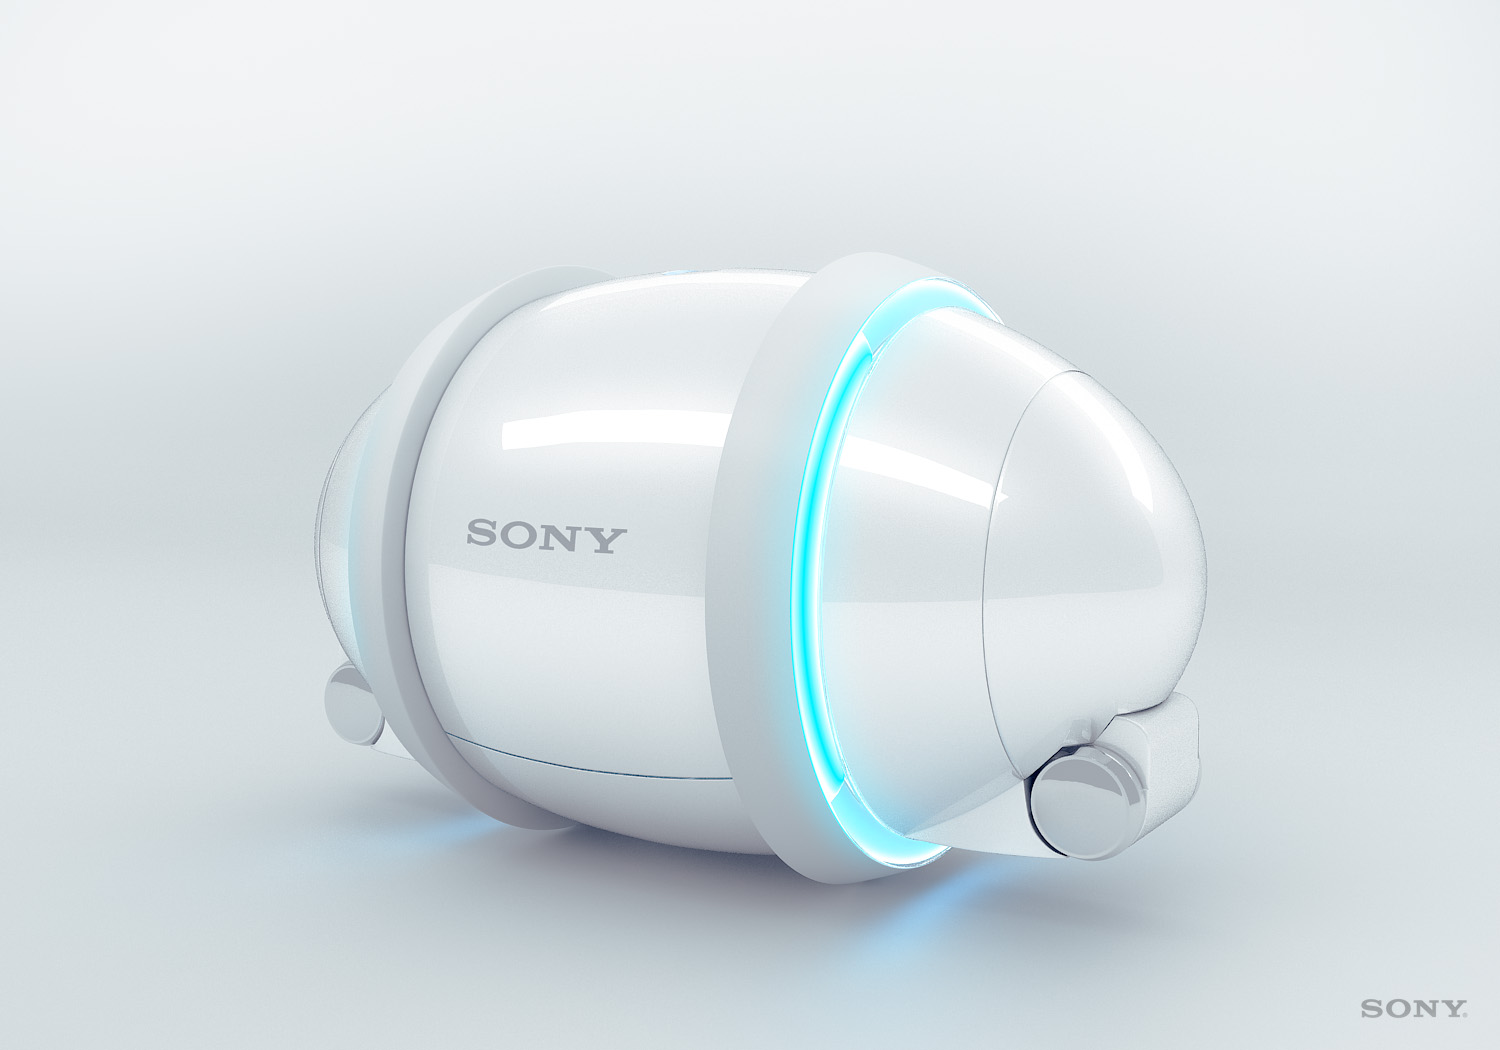 Sony Rolly rendering on Behance